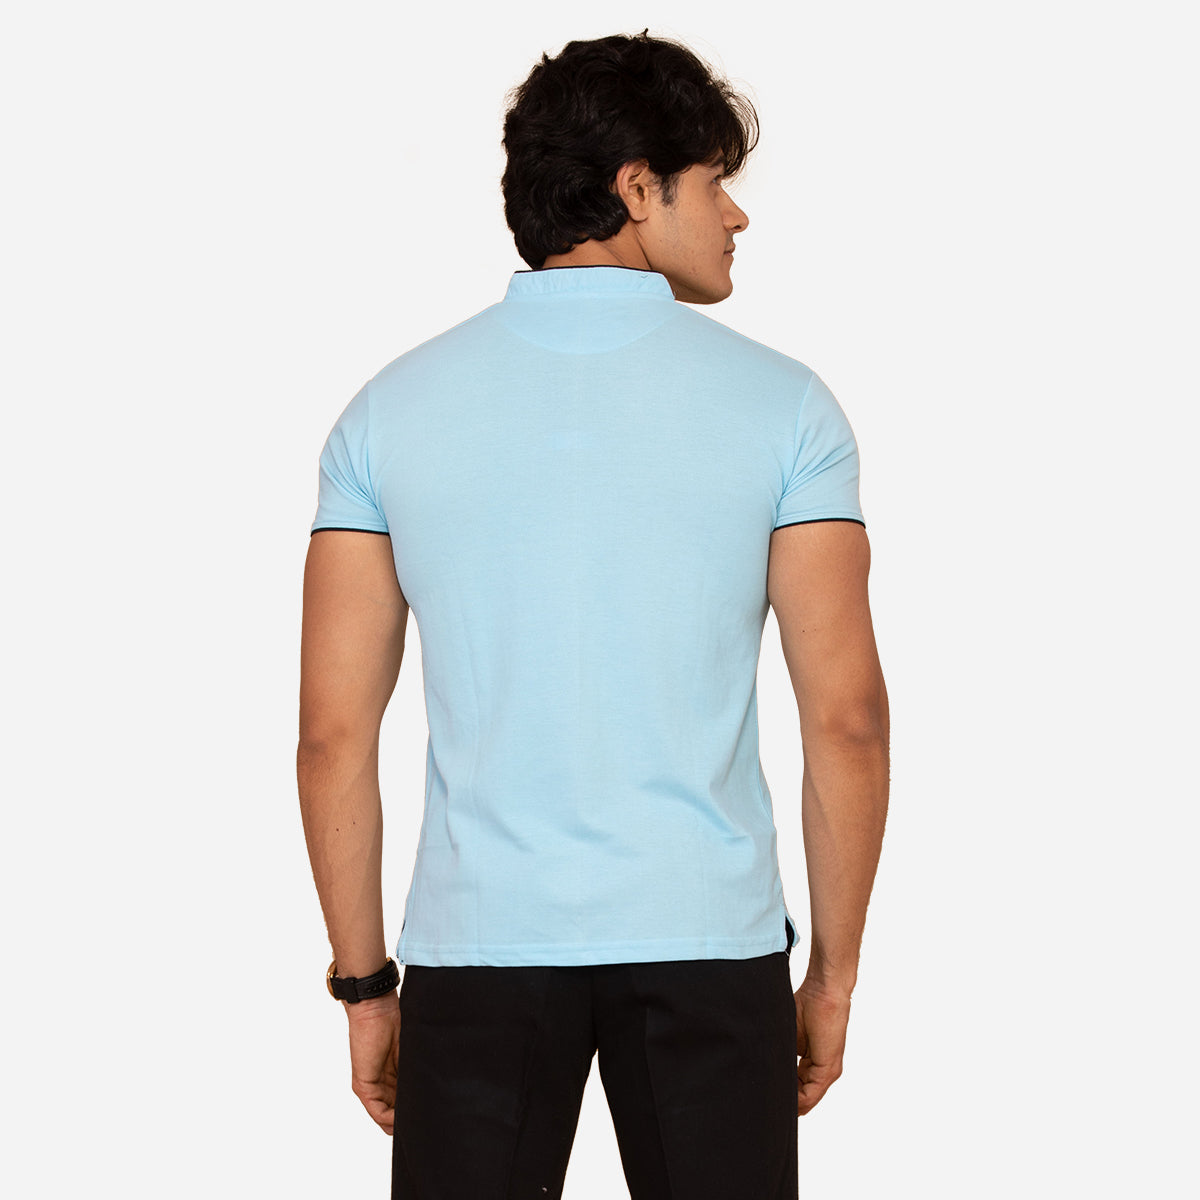 Prizmwear Pāla™️ Arctic Blue Tshirt